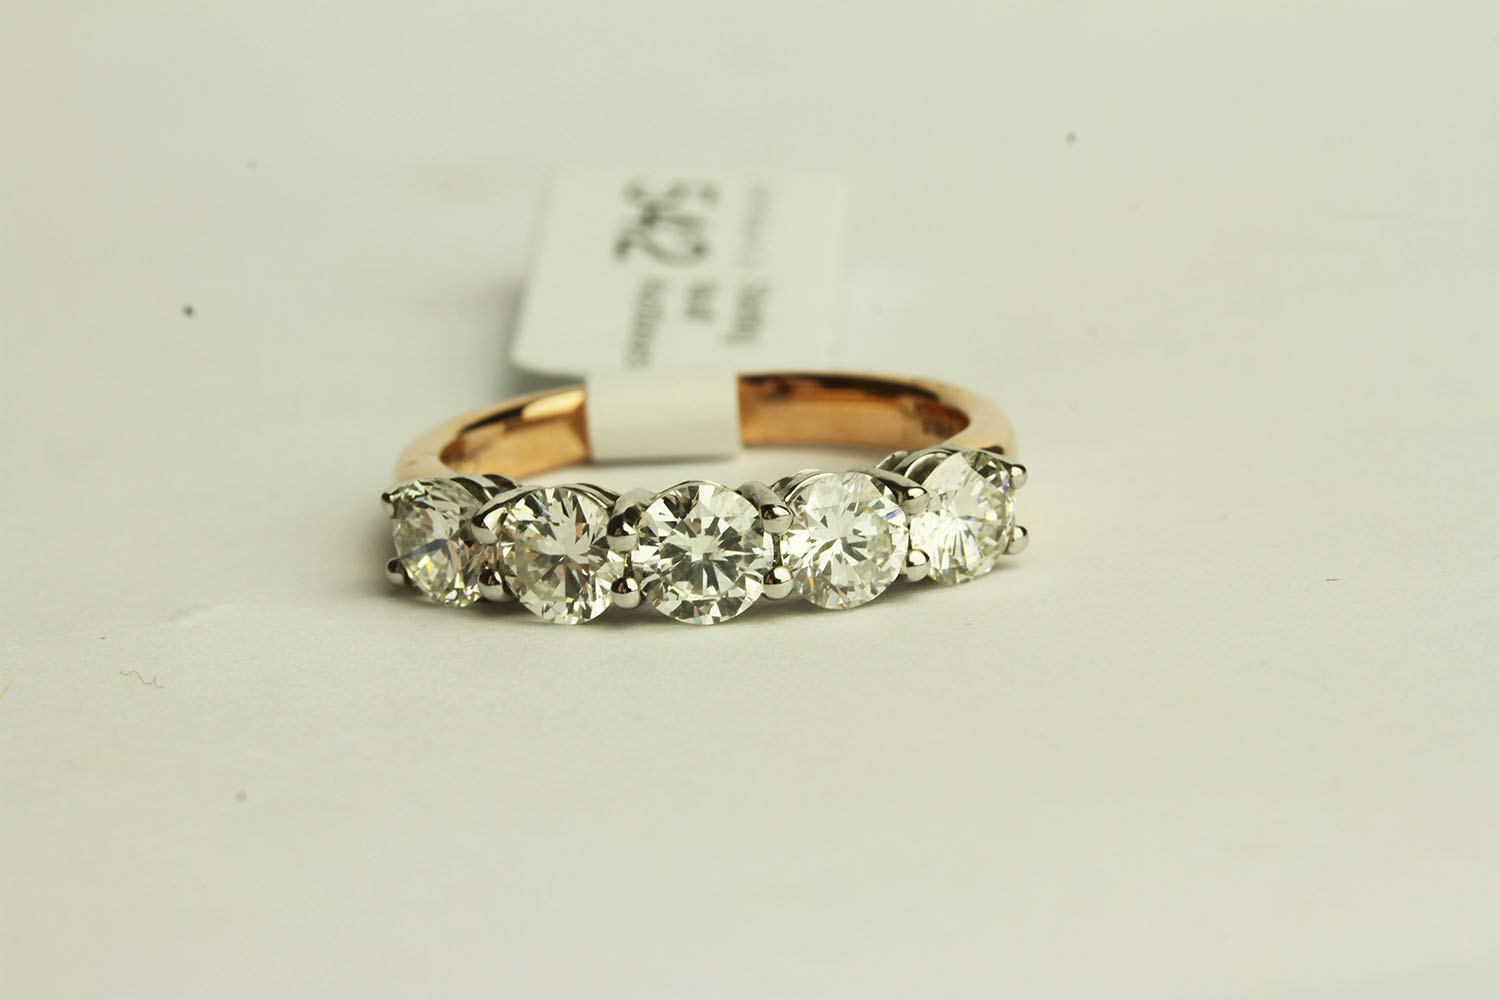 5 Stone Diamond Ring, set with 5 round brilliant cut diamonds